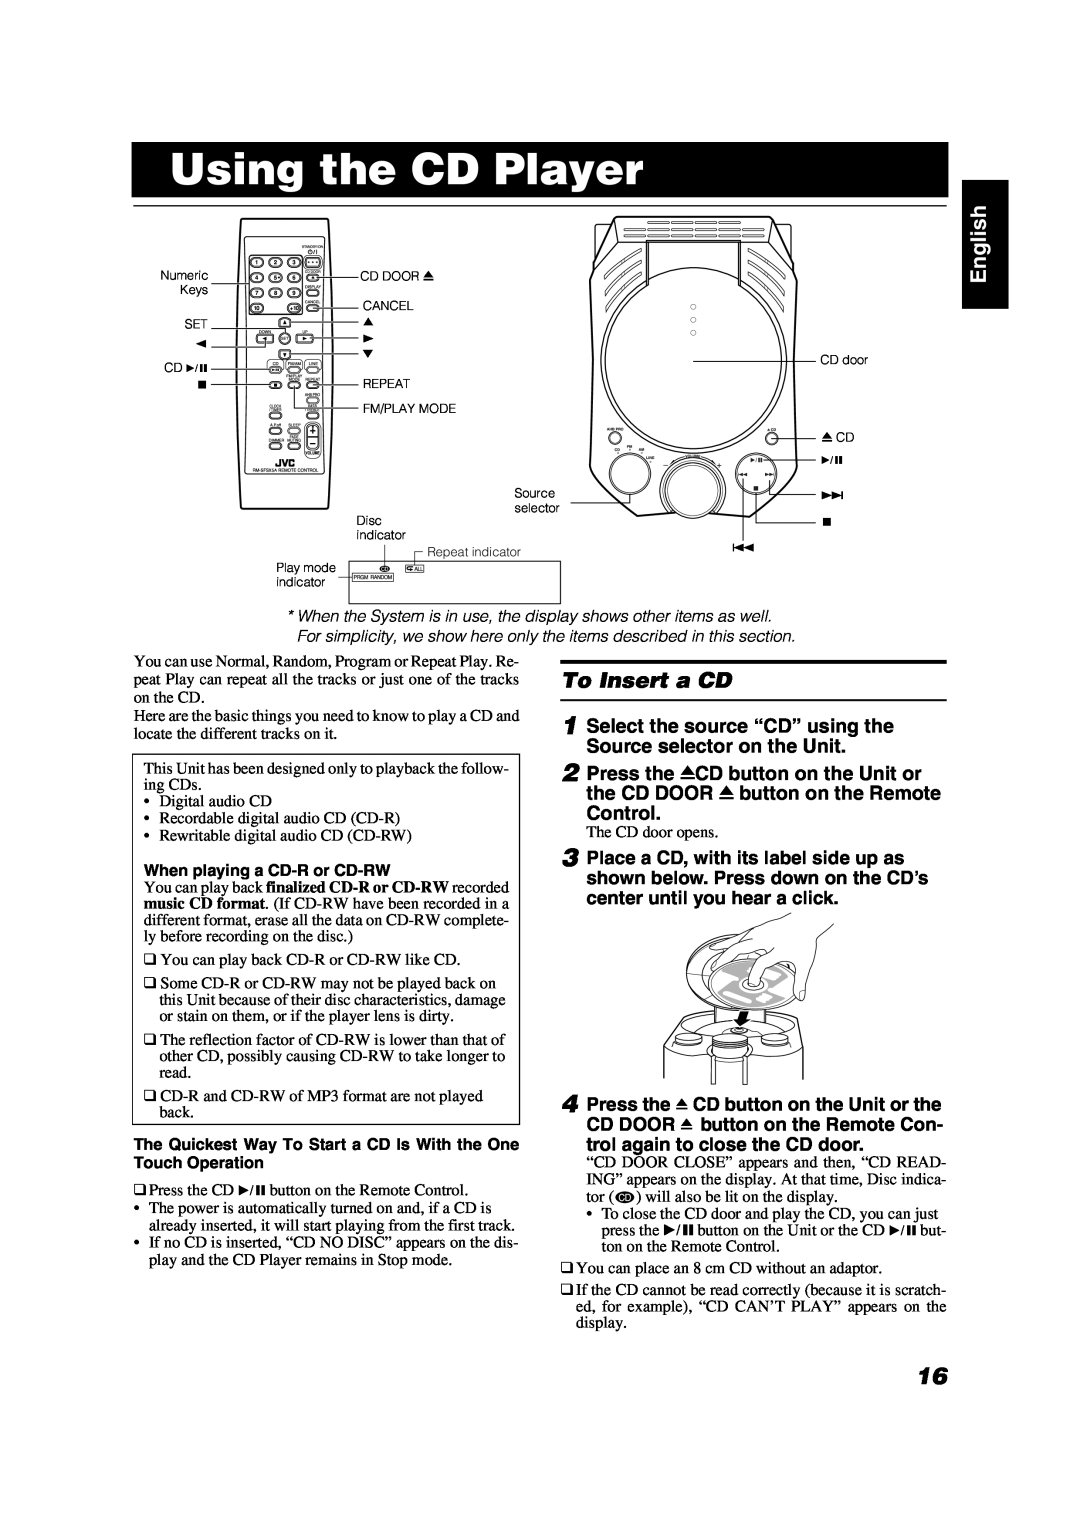 JVC FS-X3, FS-X1 manual Using the CD Player, English, To Insert a CD, Control 